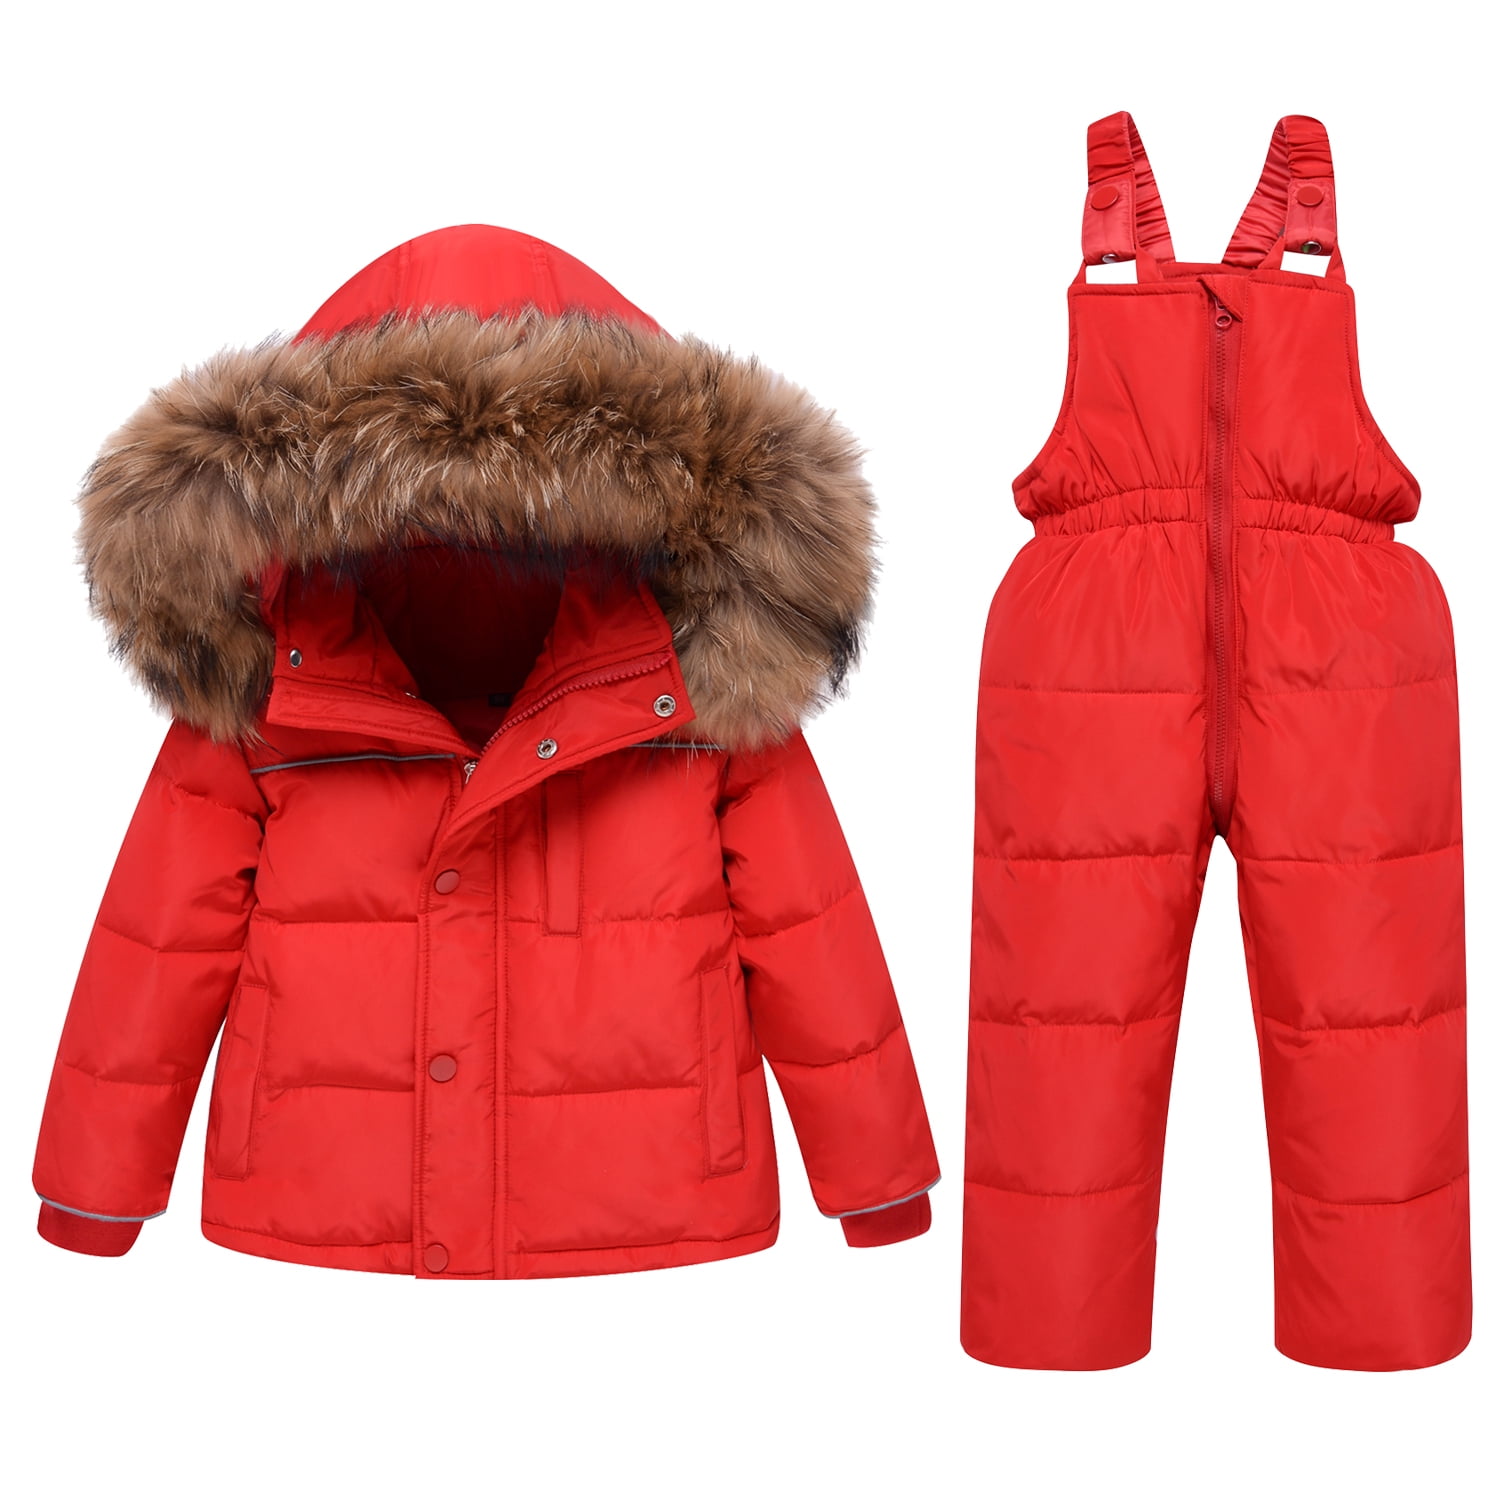 CARETOO Baby Boys Girls Winter Down Coats Snowsuit Outerwear 2Pcs Clothes Hooded Jacket Snow Ski Bib Pants Outfits Set